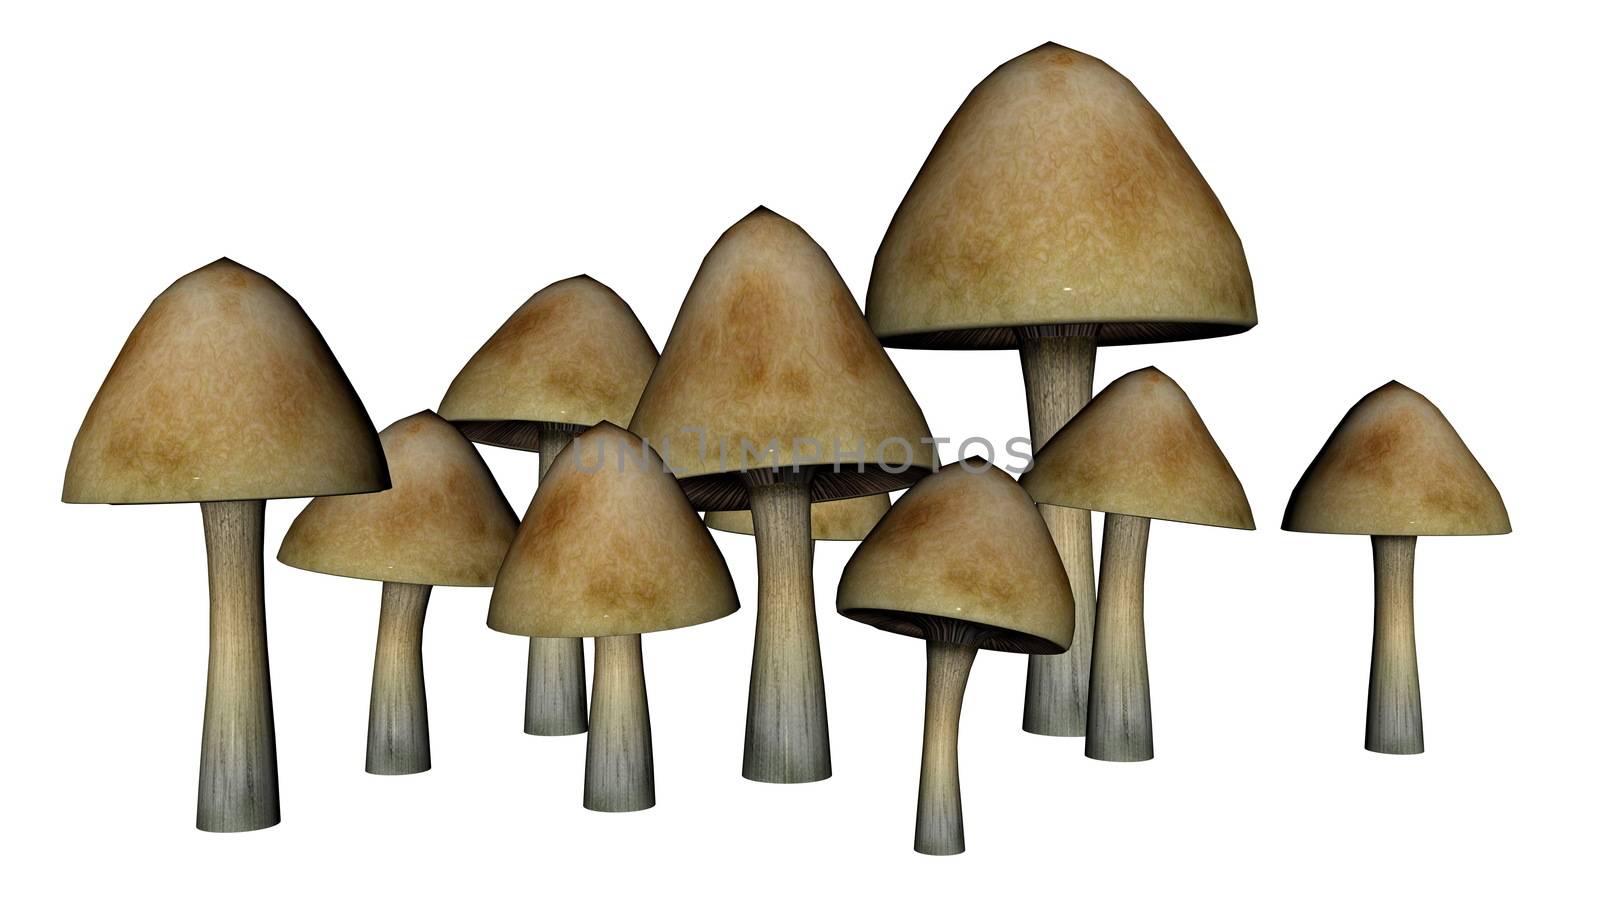 Common mushrooms - 3D render by Elenaphotos21